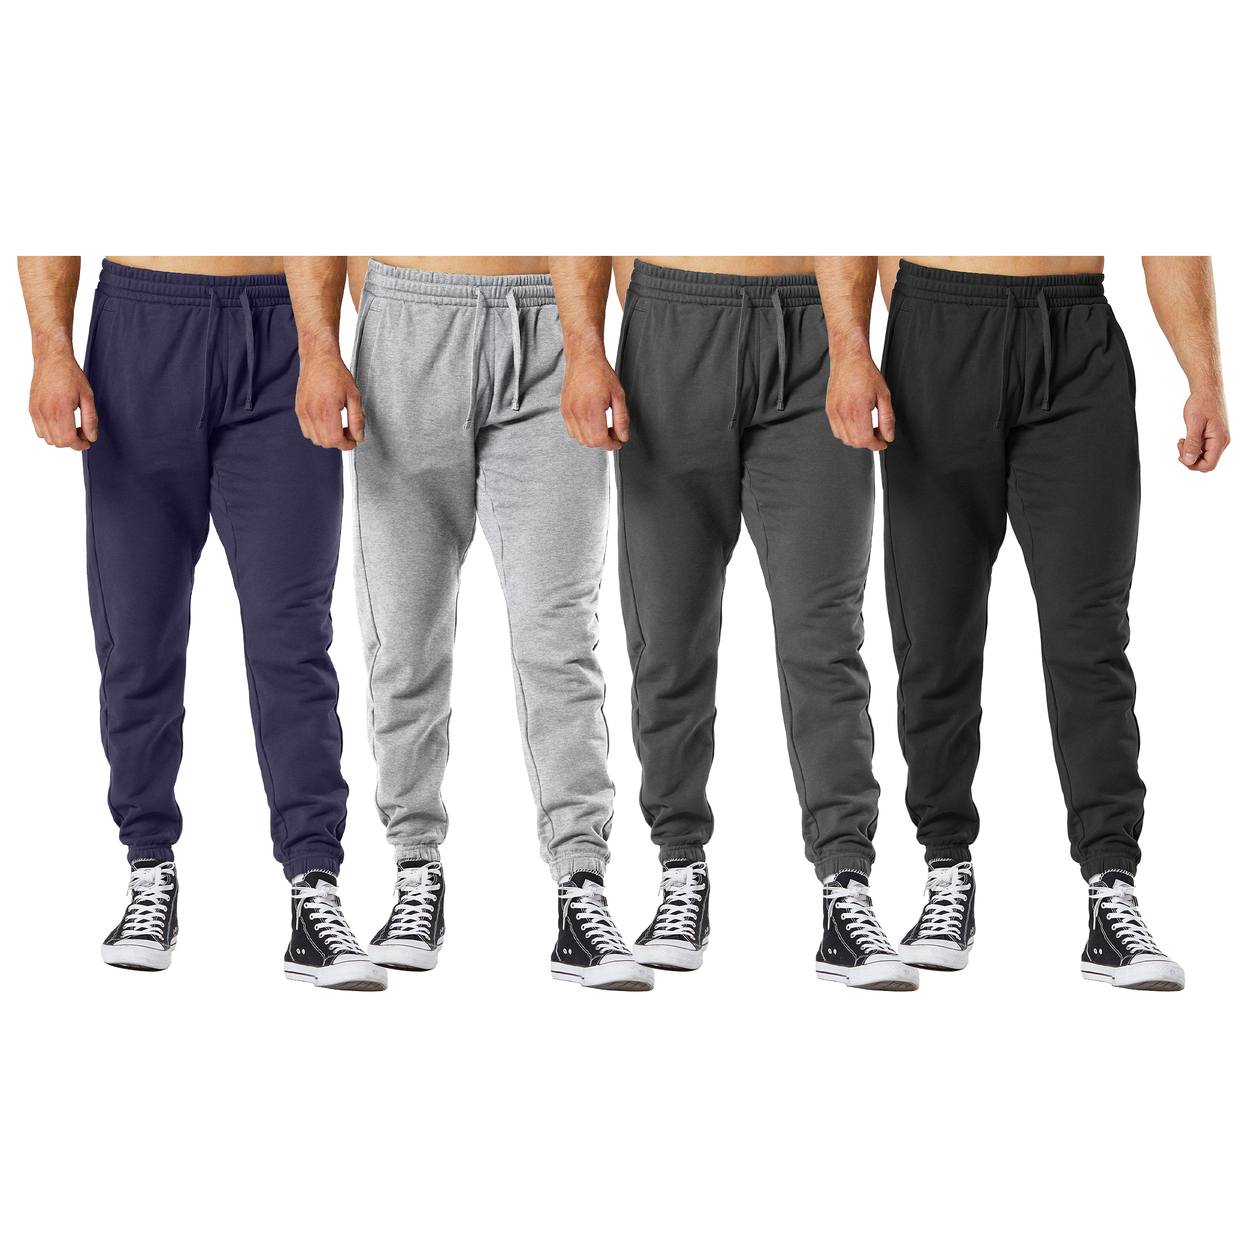 Men's Ultra-Soft Cozy Winter Warm Casual Fleece Lined Sweatpants Jogger - Black, Small